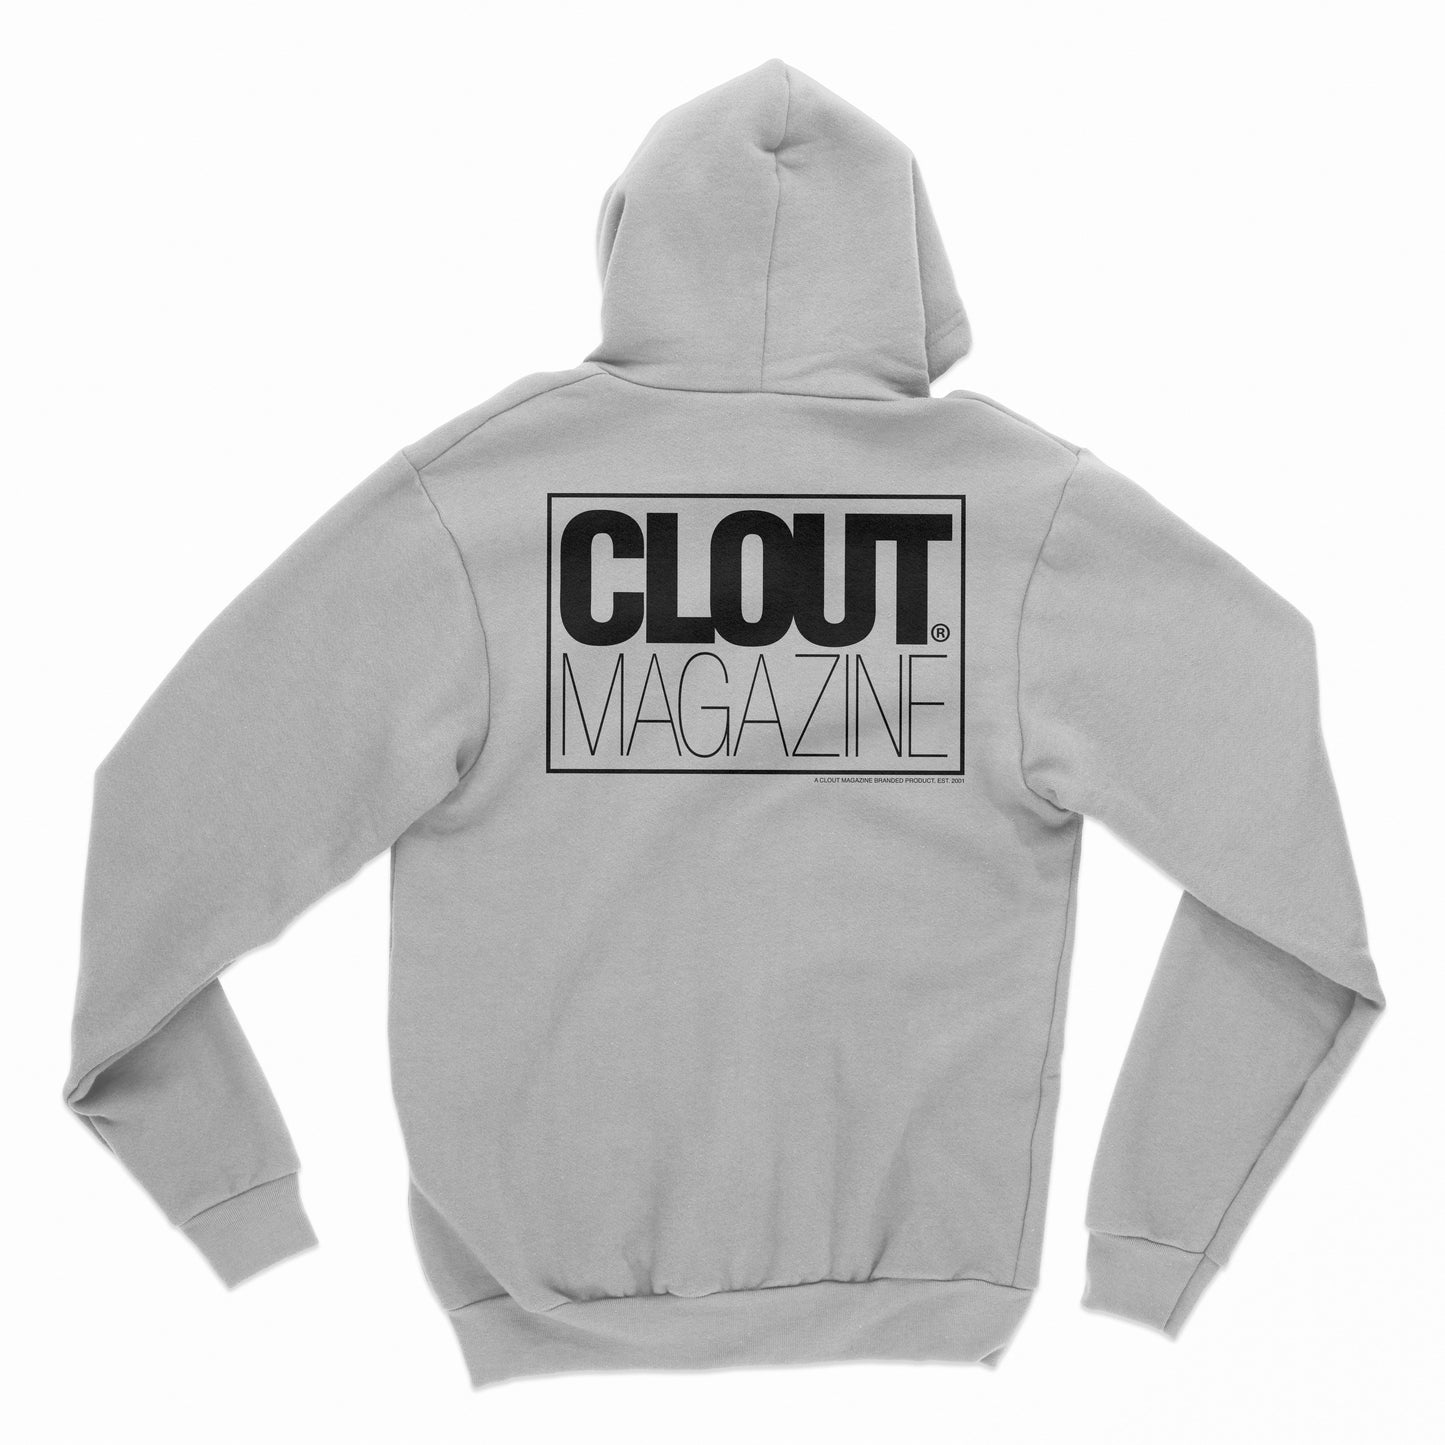 Clout Magazine Zip Up Hoodie - Heather Gray w/ Black Print – CLOUT Magazine